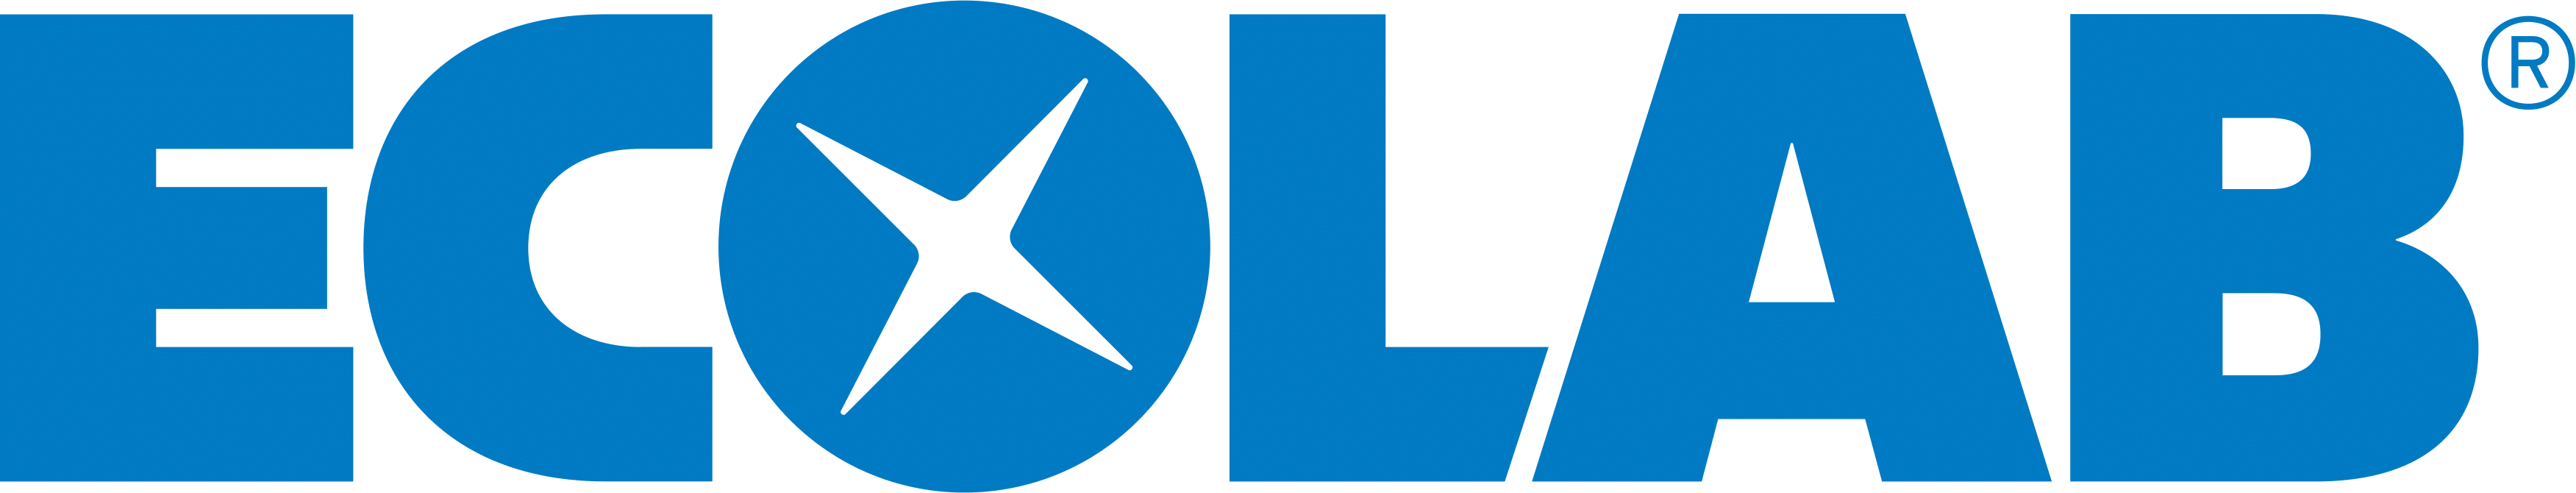 Ecolab_Logo_Blue_CMYK.png